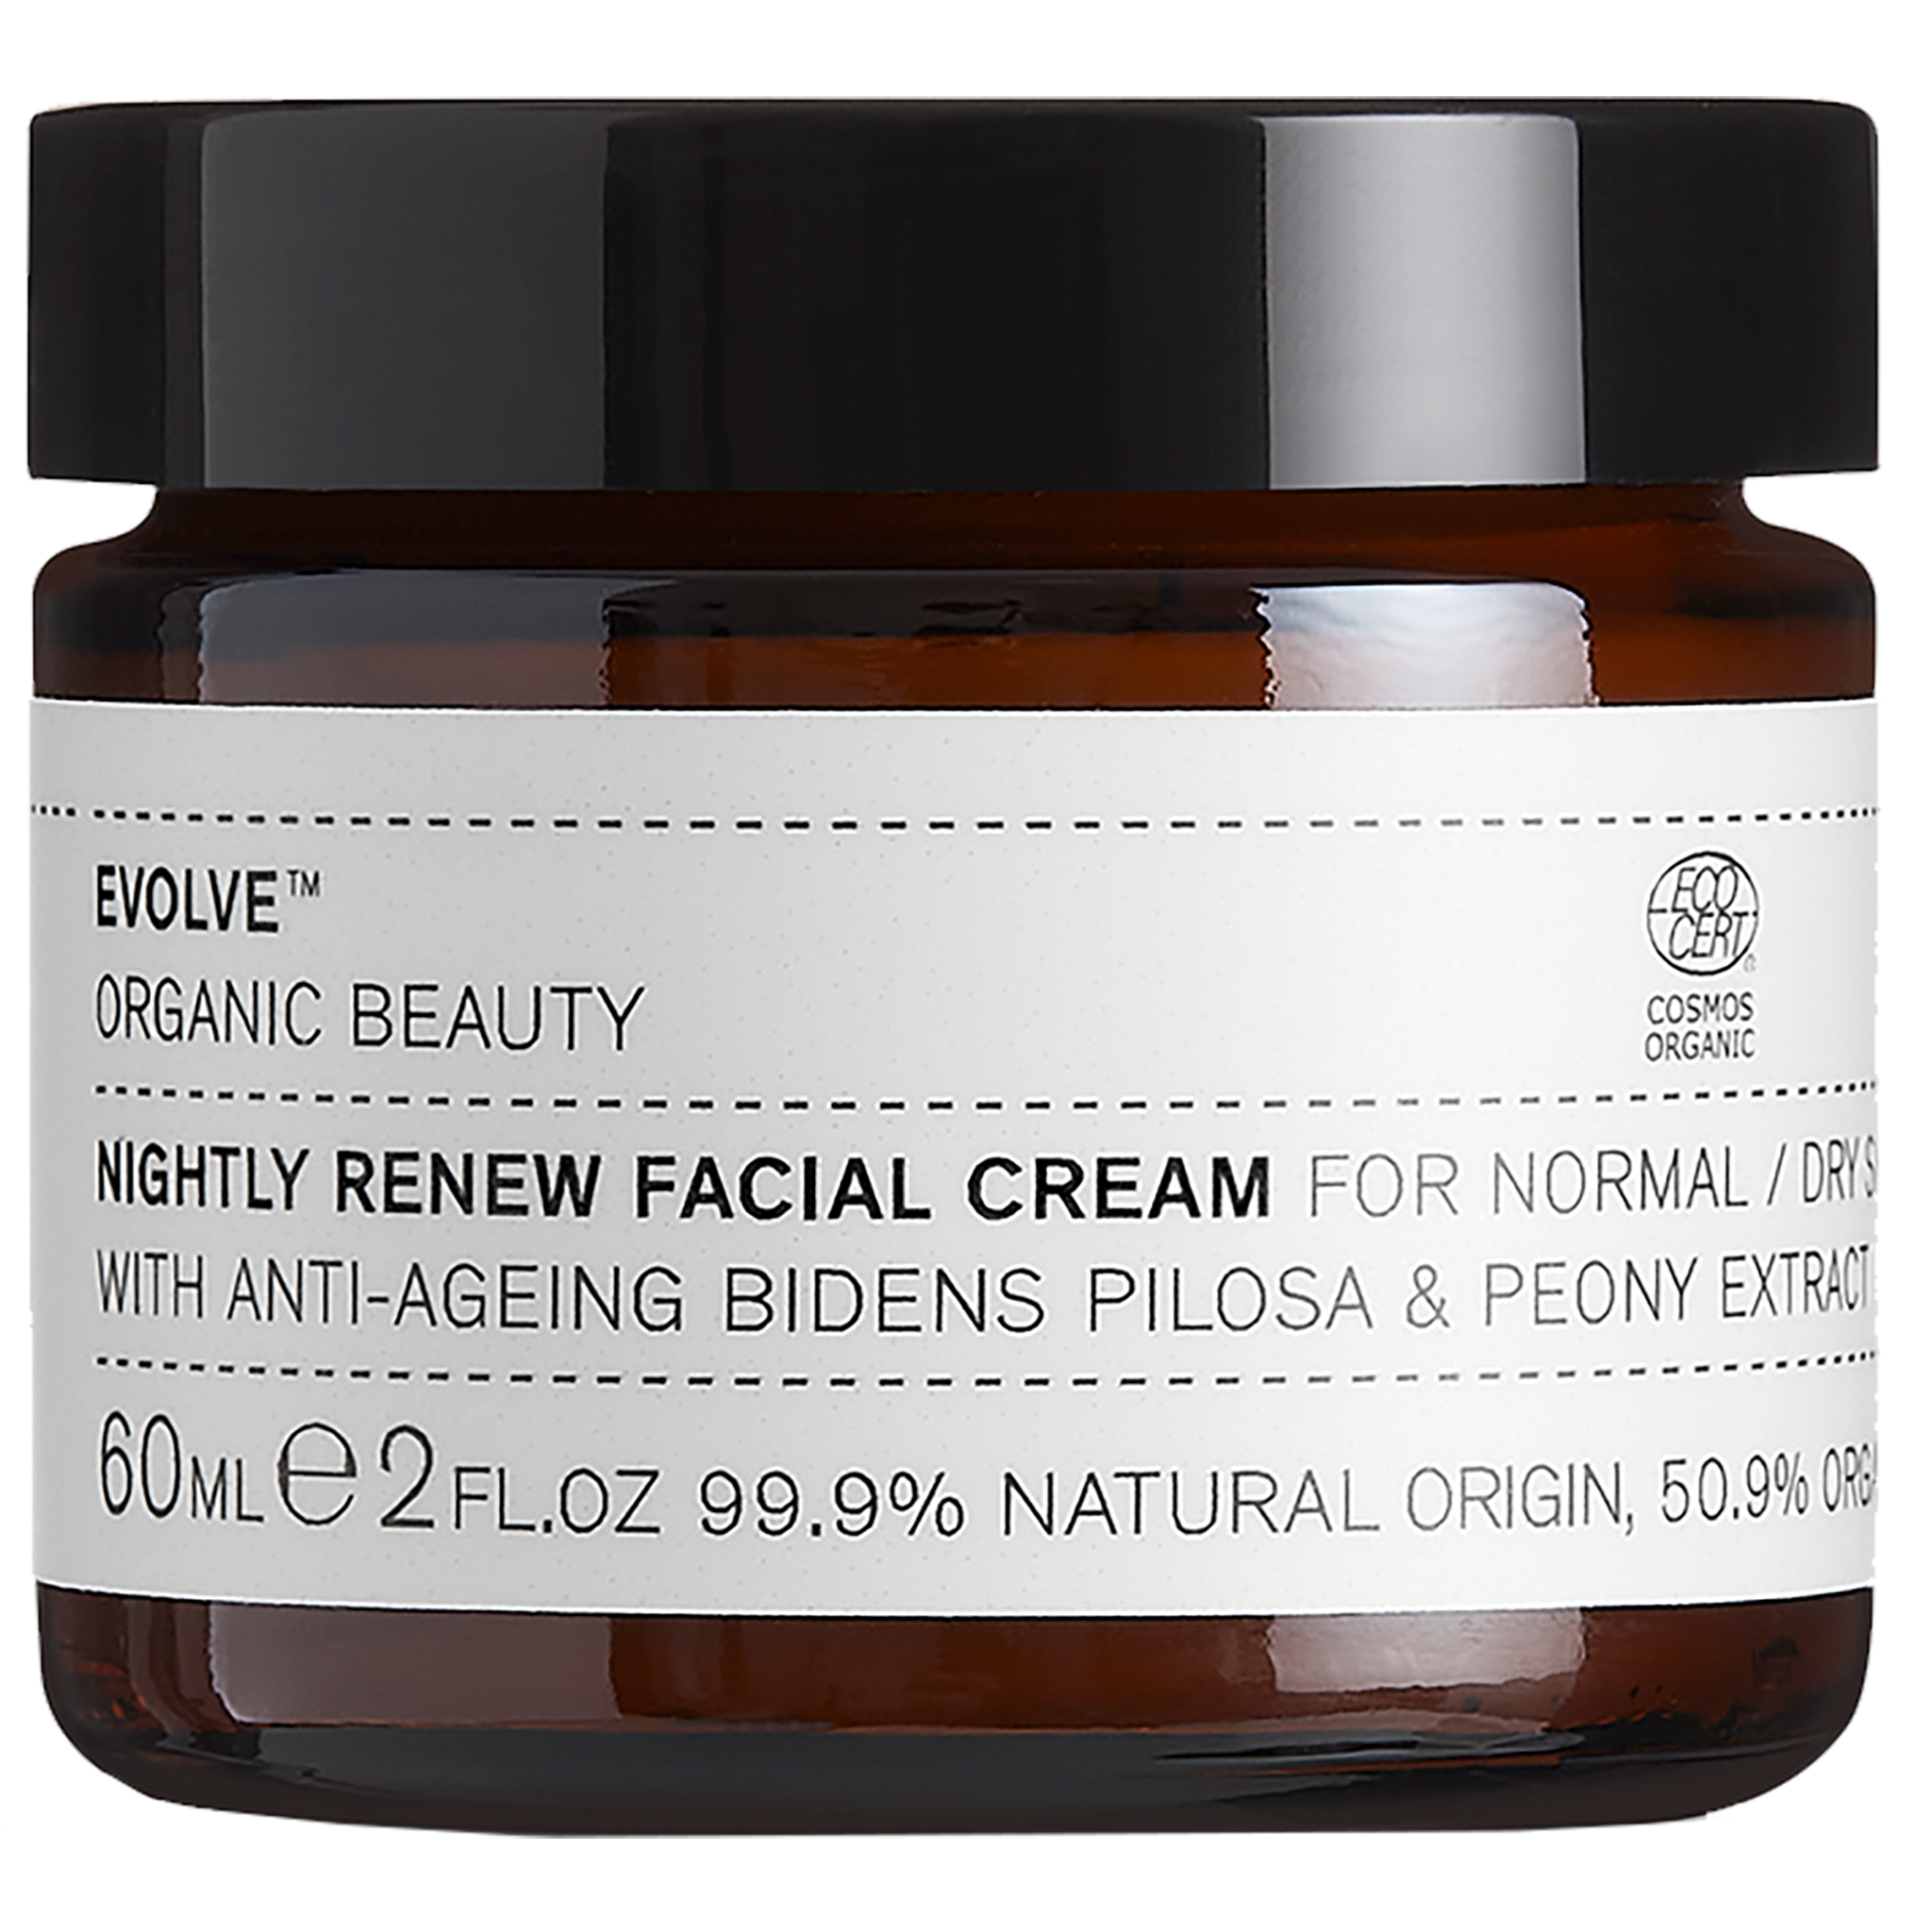 -NEW Nightly Renew Facial Cream